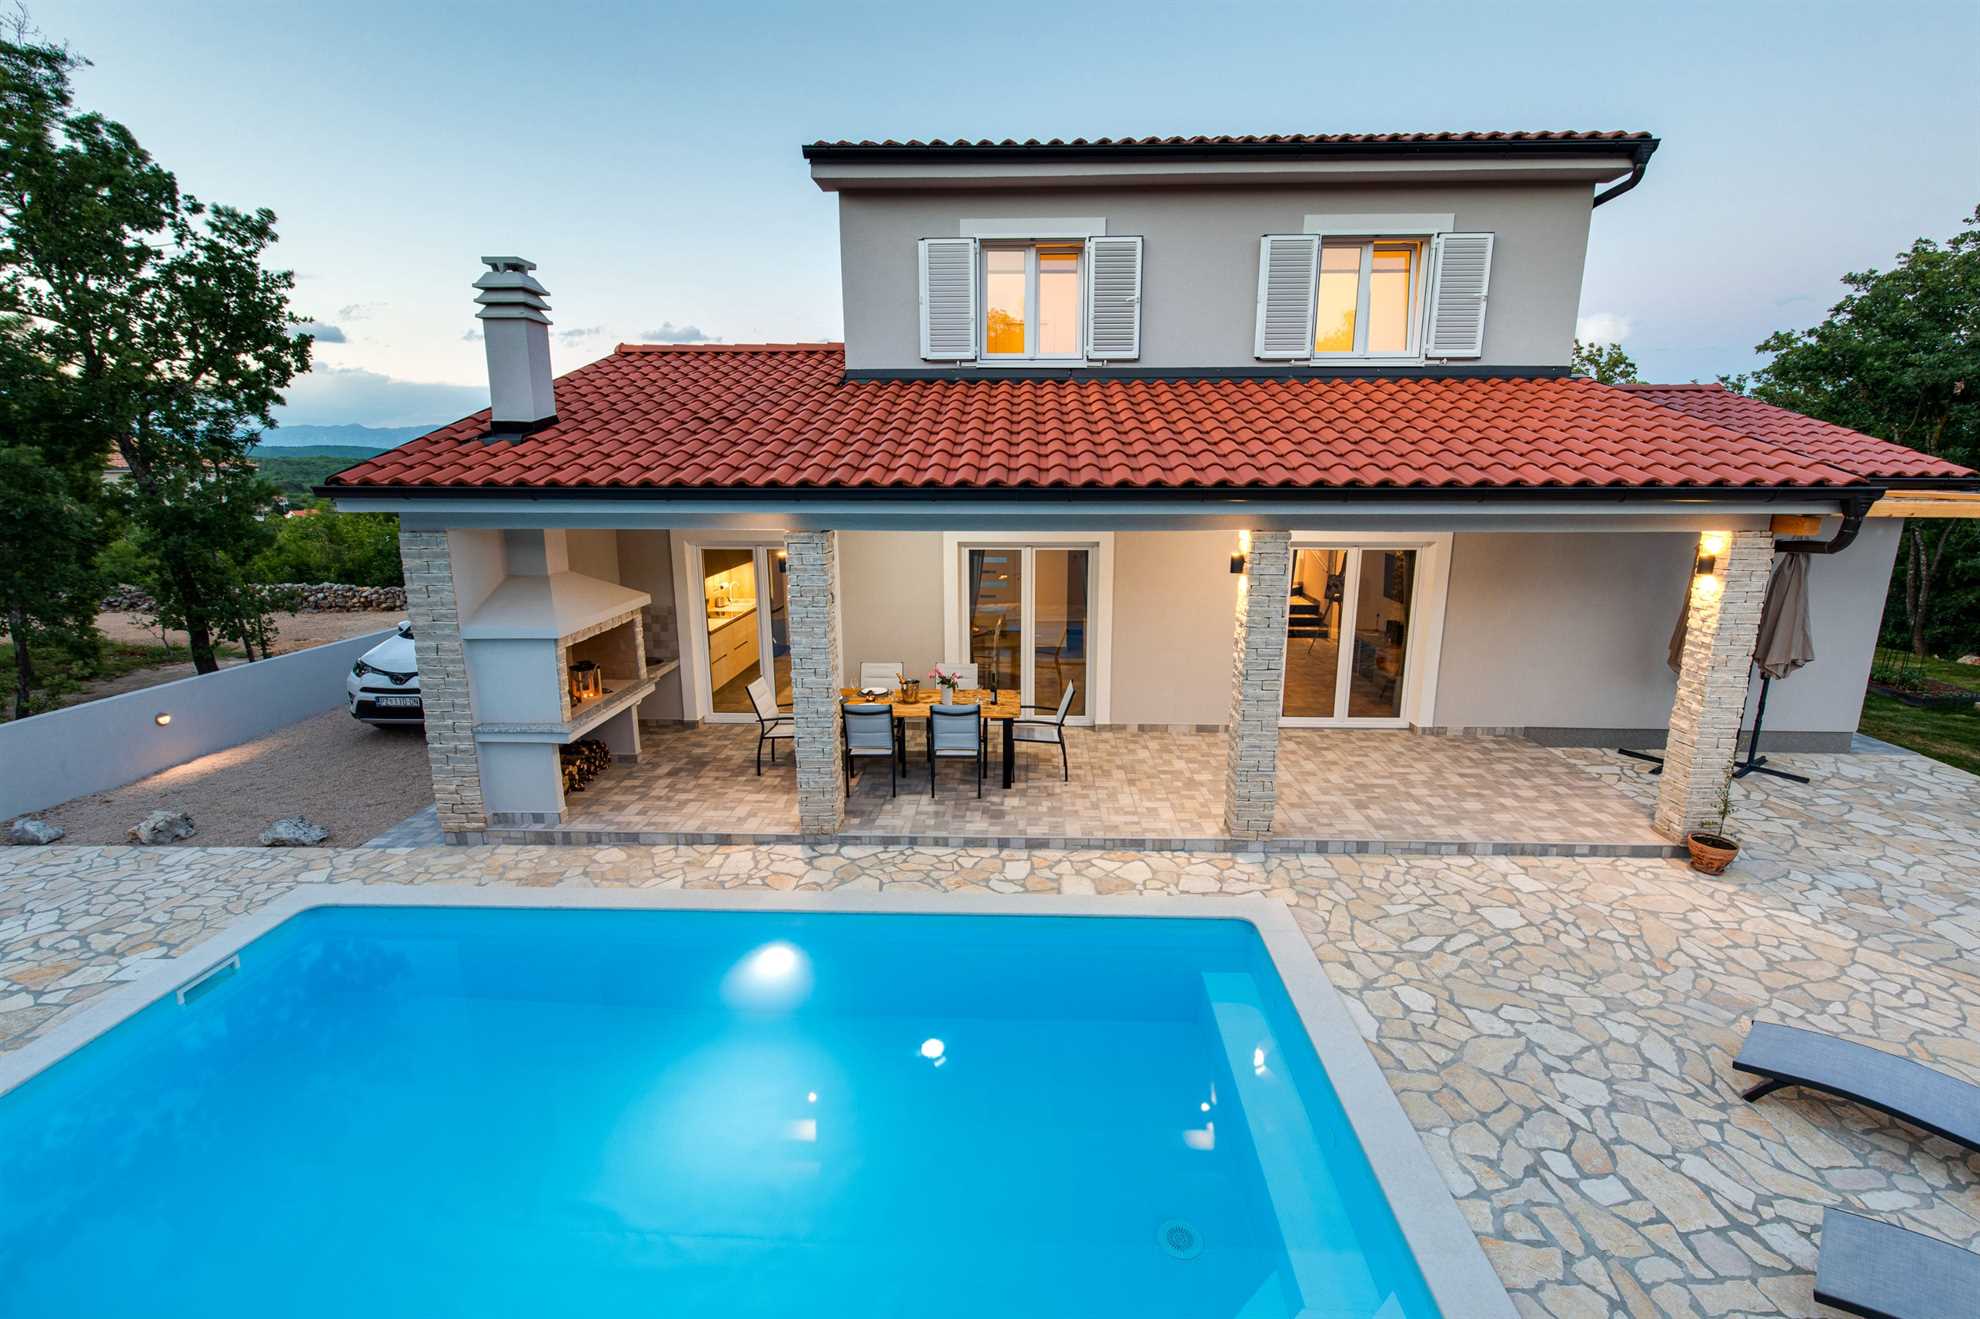 Villa SANDRINA con piscina riscaldata e ampio cortile